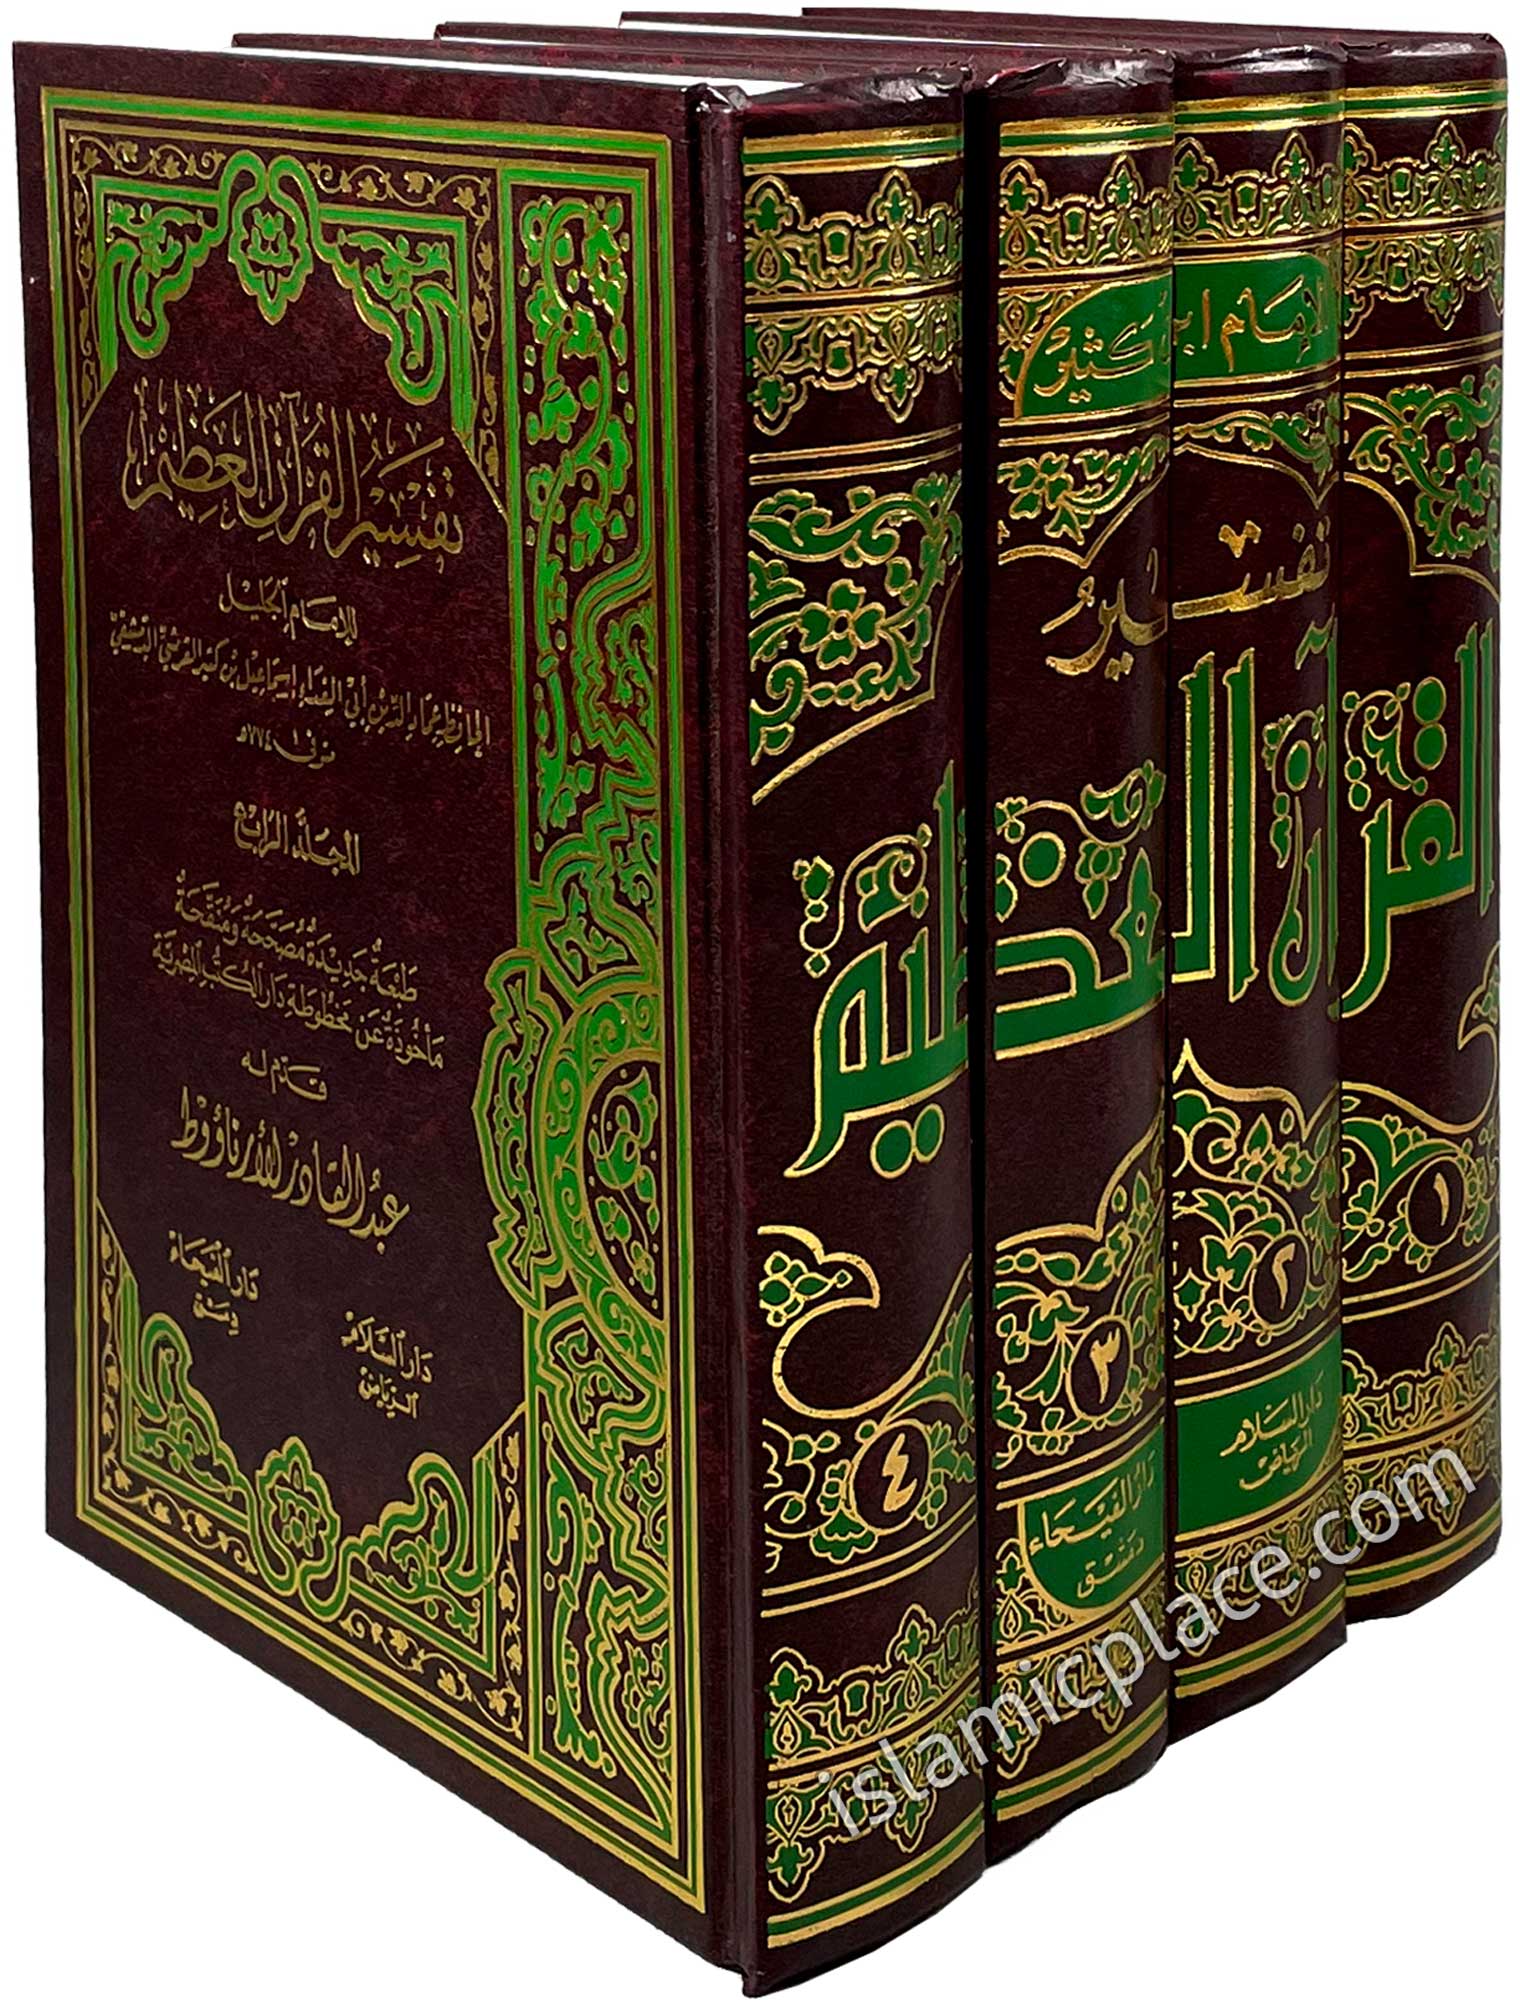 [4 vol set] Arabic: Tafsir Ibn Kathir